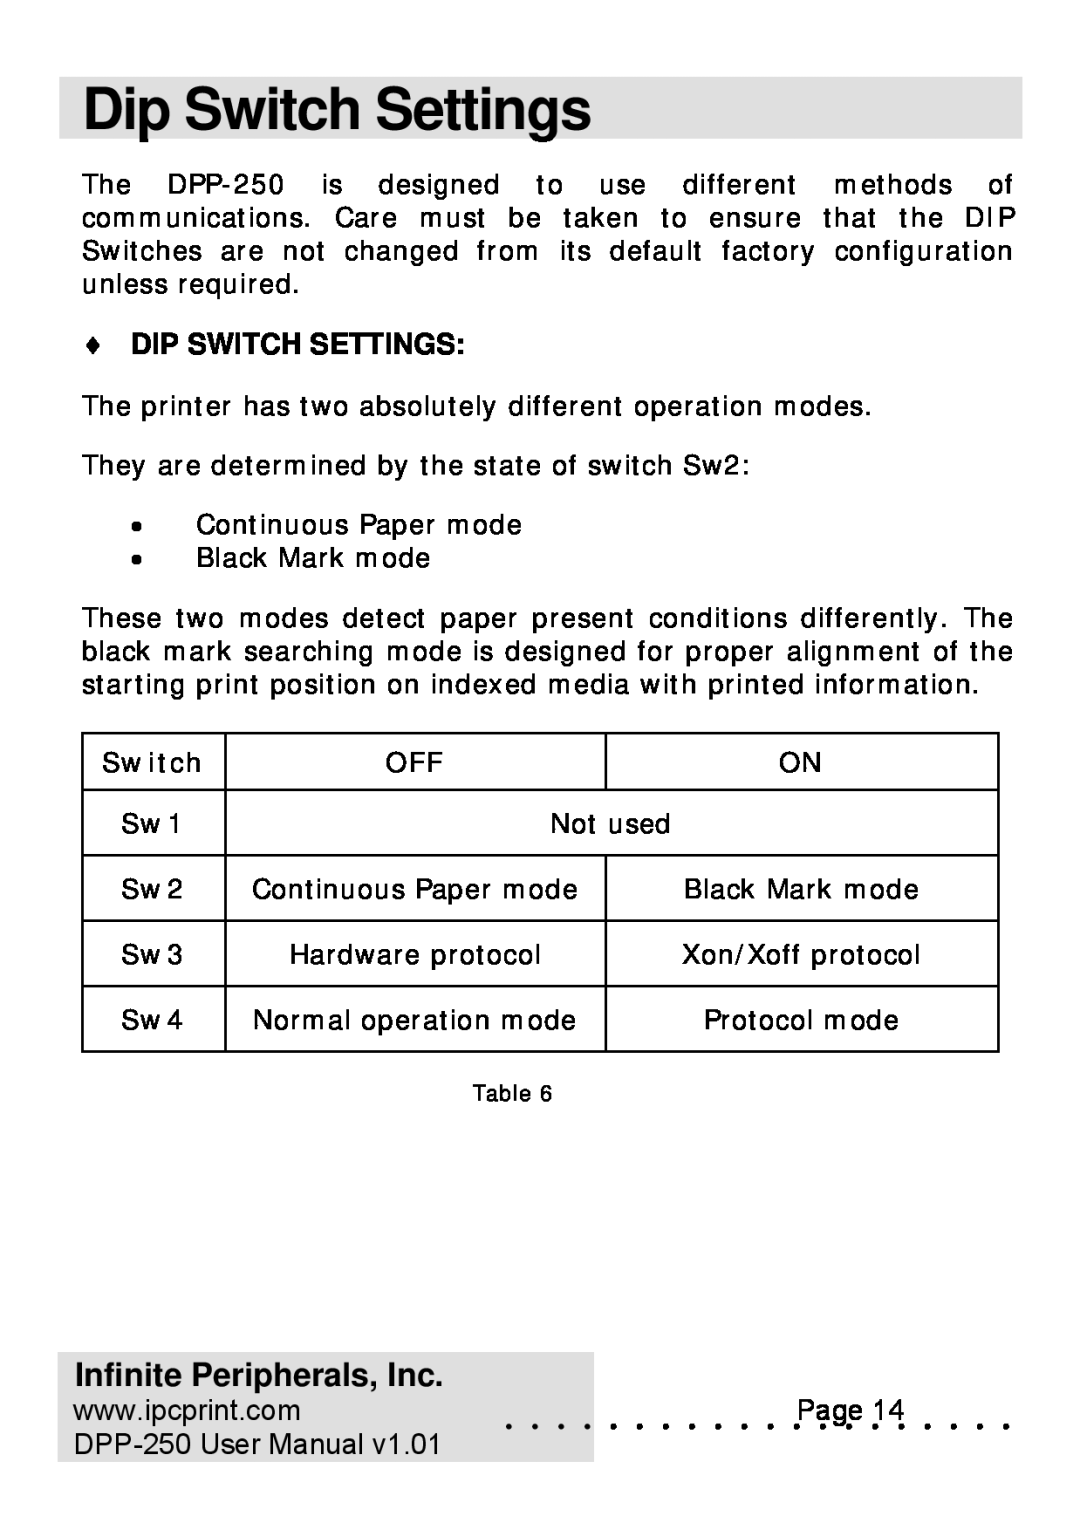 Infinite Peripherals user manual Dip Switch Settings, Infinite Peripherals, Inc, DPP-250 User Manual 